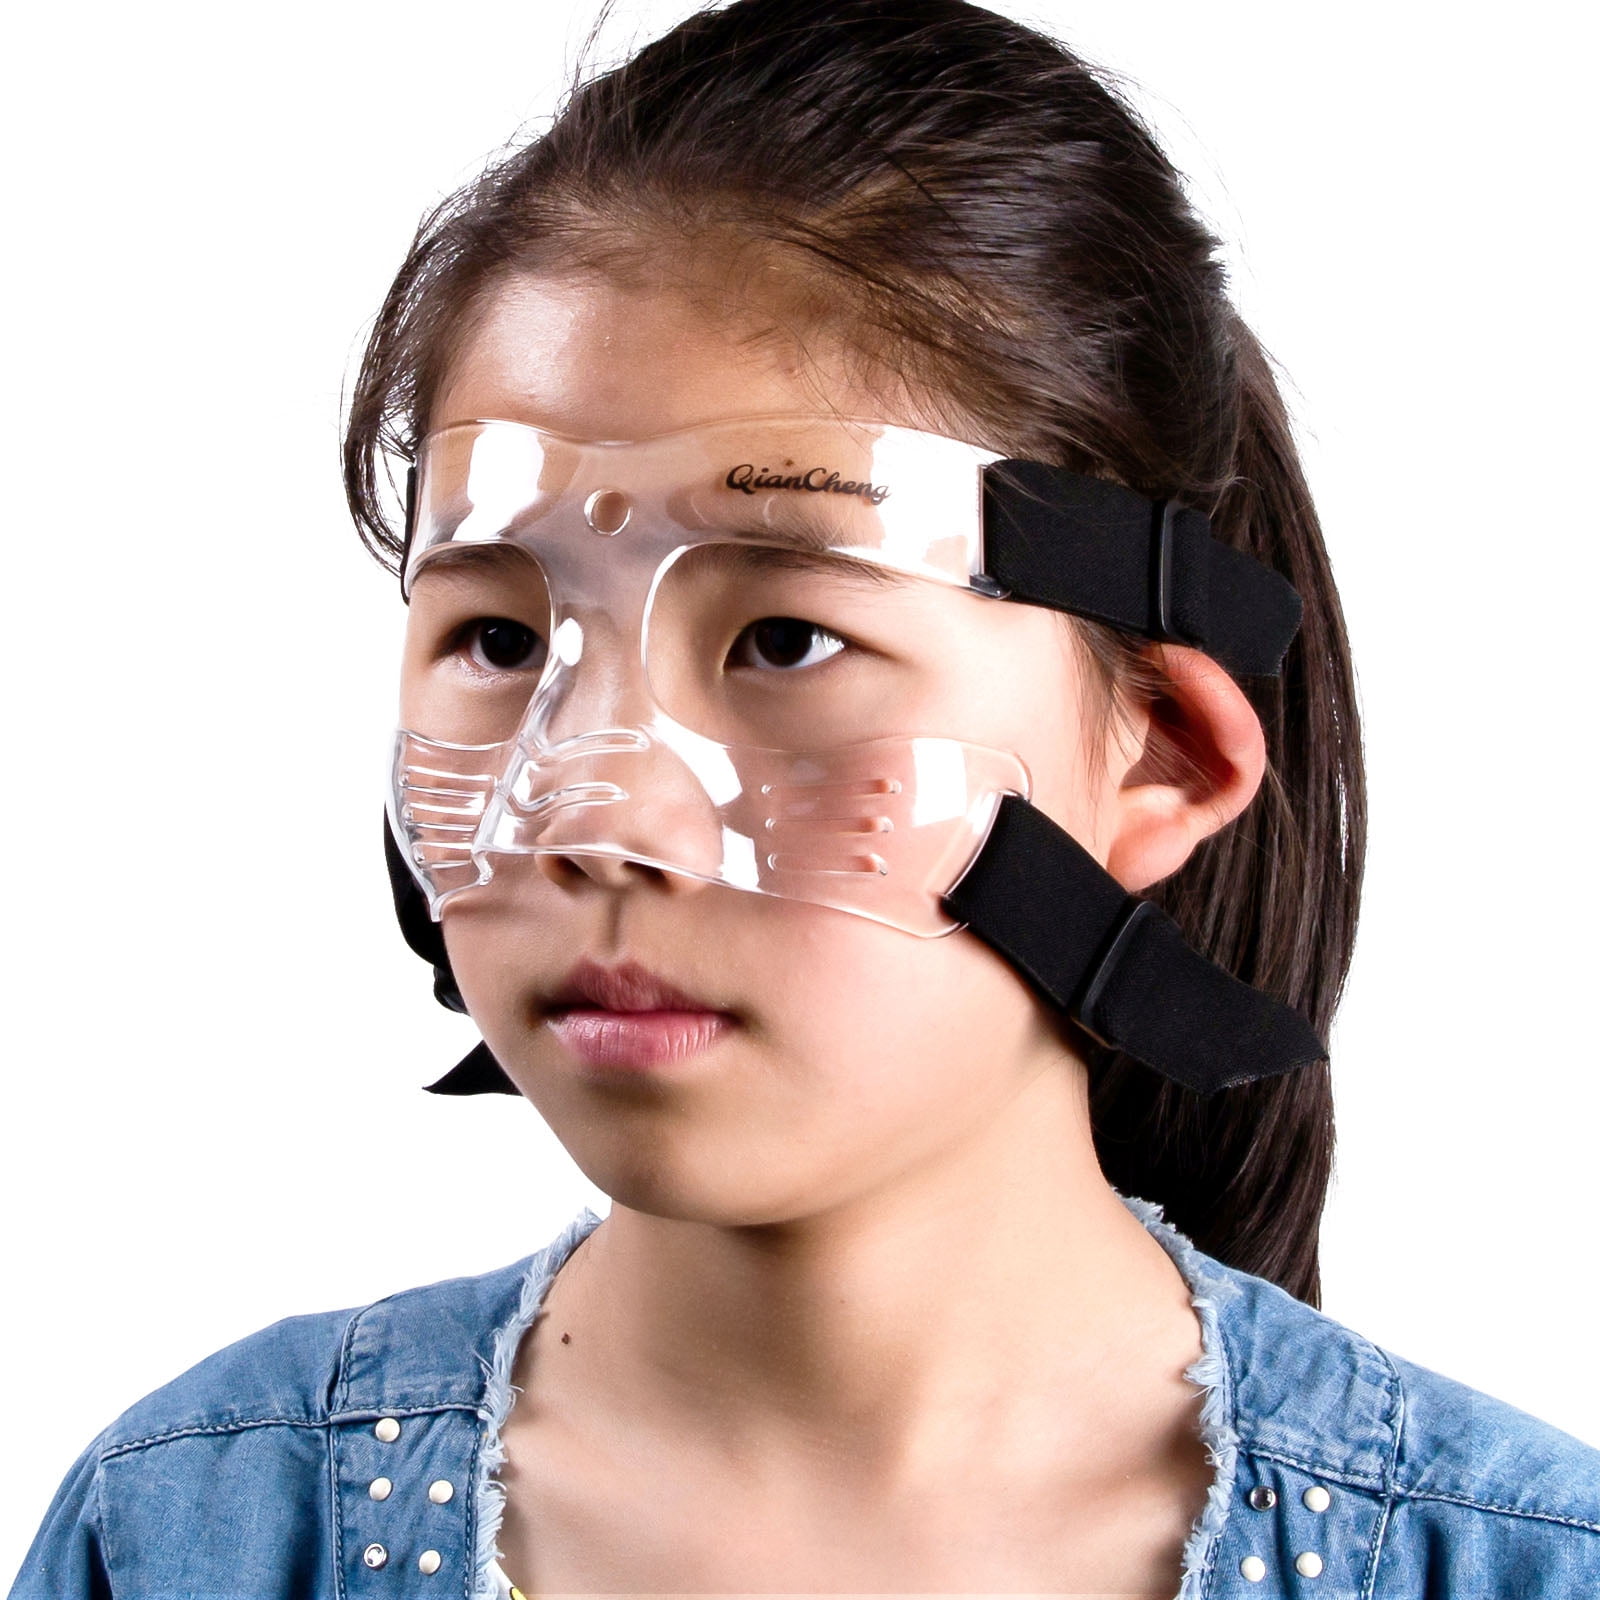 B Baosity Nose Guard for Broken Nose Facial Shields with Padding